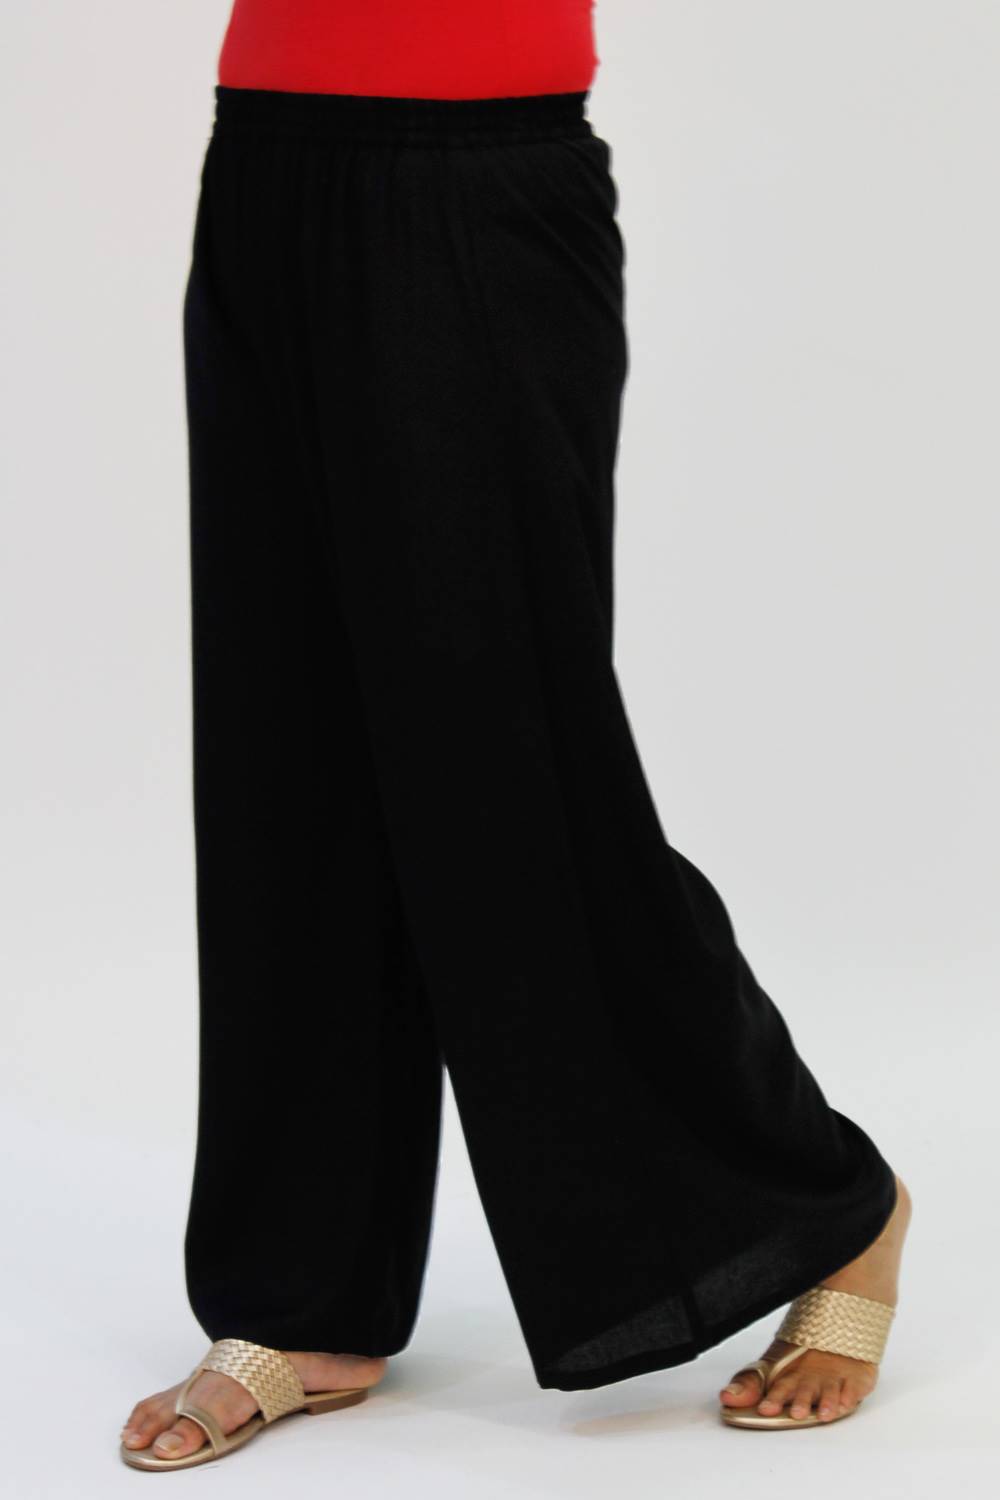 Buy Lastinch Women's Plus Size Boho Printed Trouser (Medium)(Size  34-35inches) Multicolour at